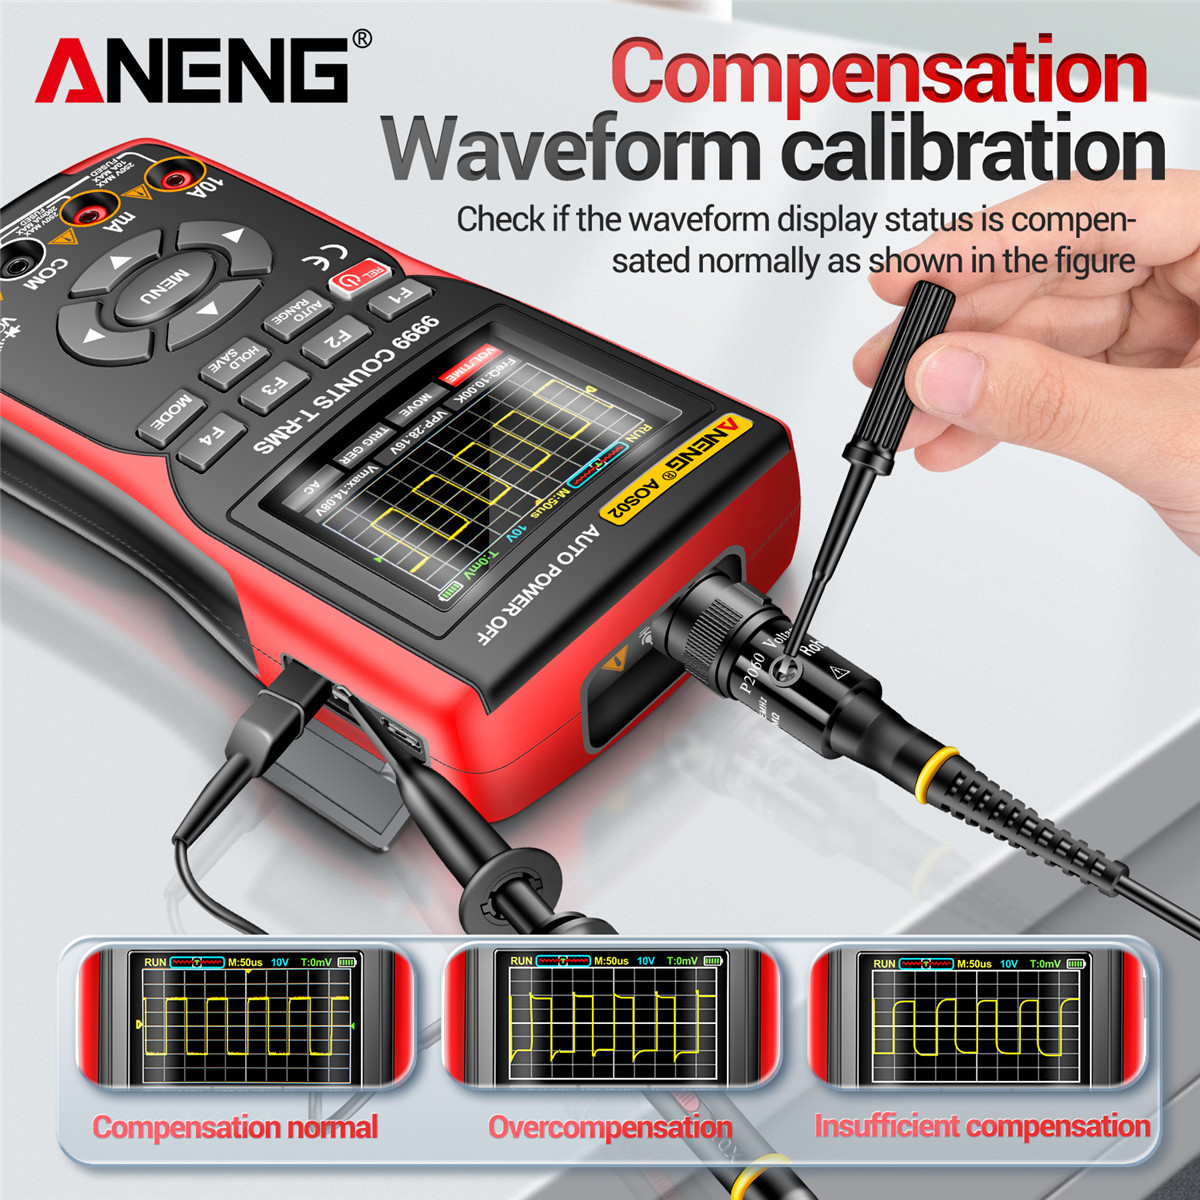 ANENG AOS02 9999 Counts Digital Professional Oscilloscope Multimeter 48M/S 10MHZ PC Waveform Data Storage True RMS Tranistor